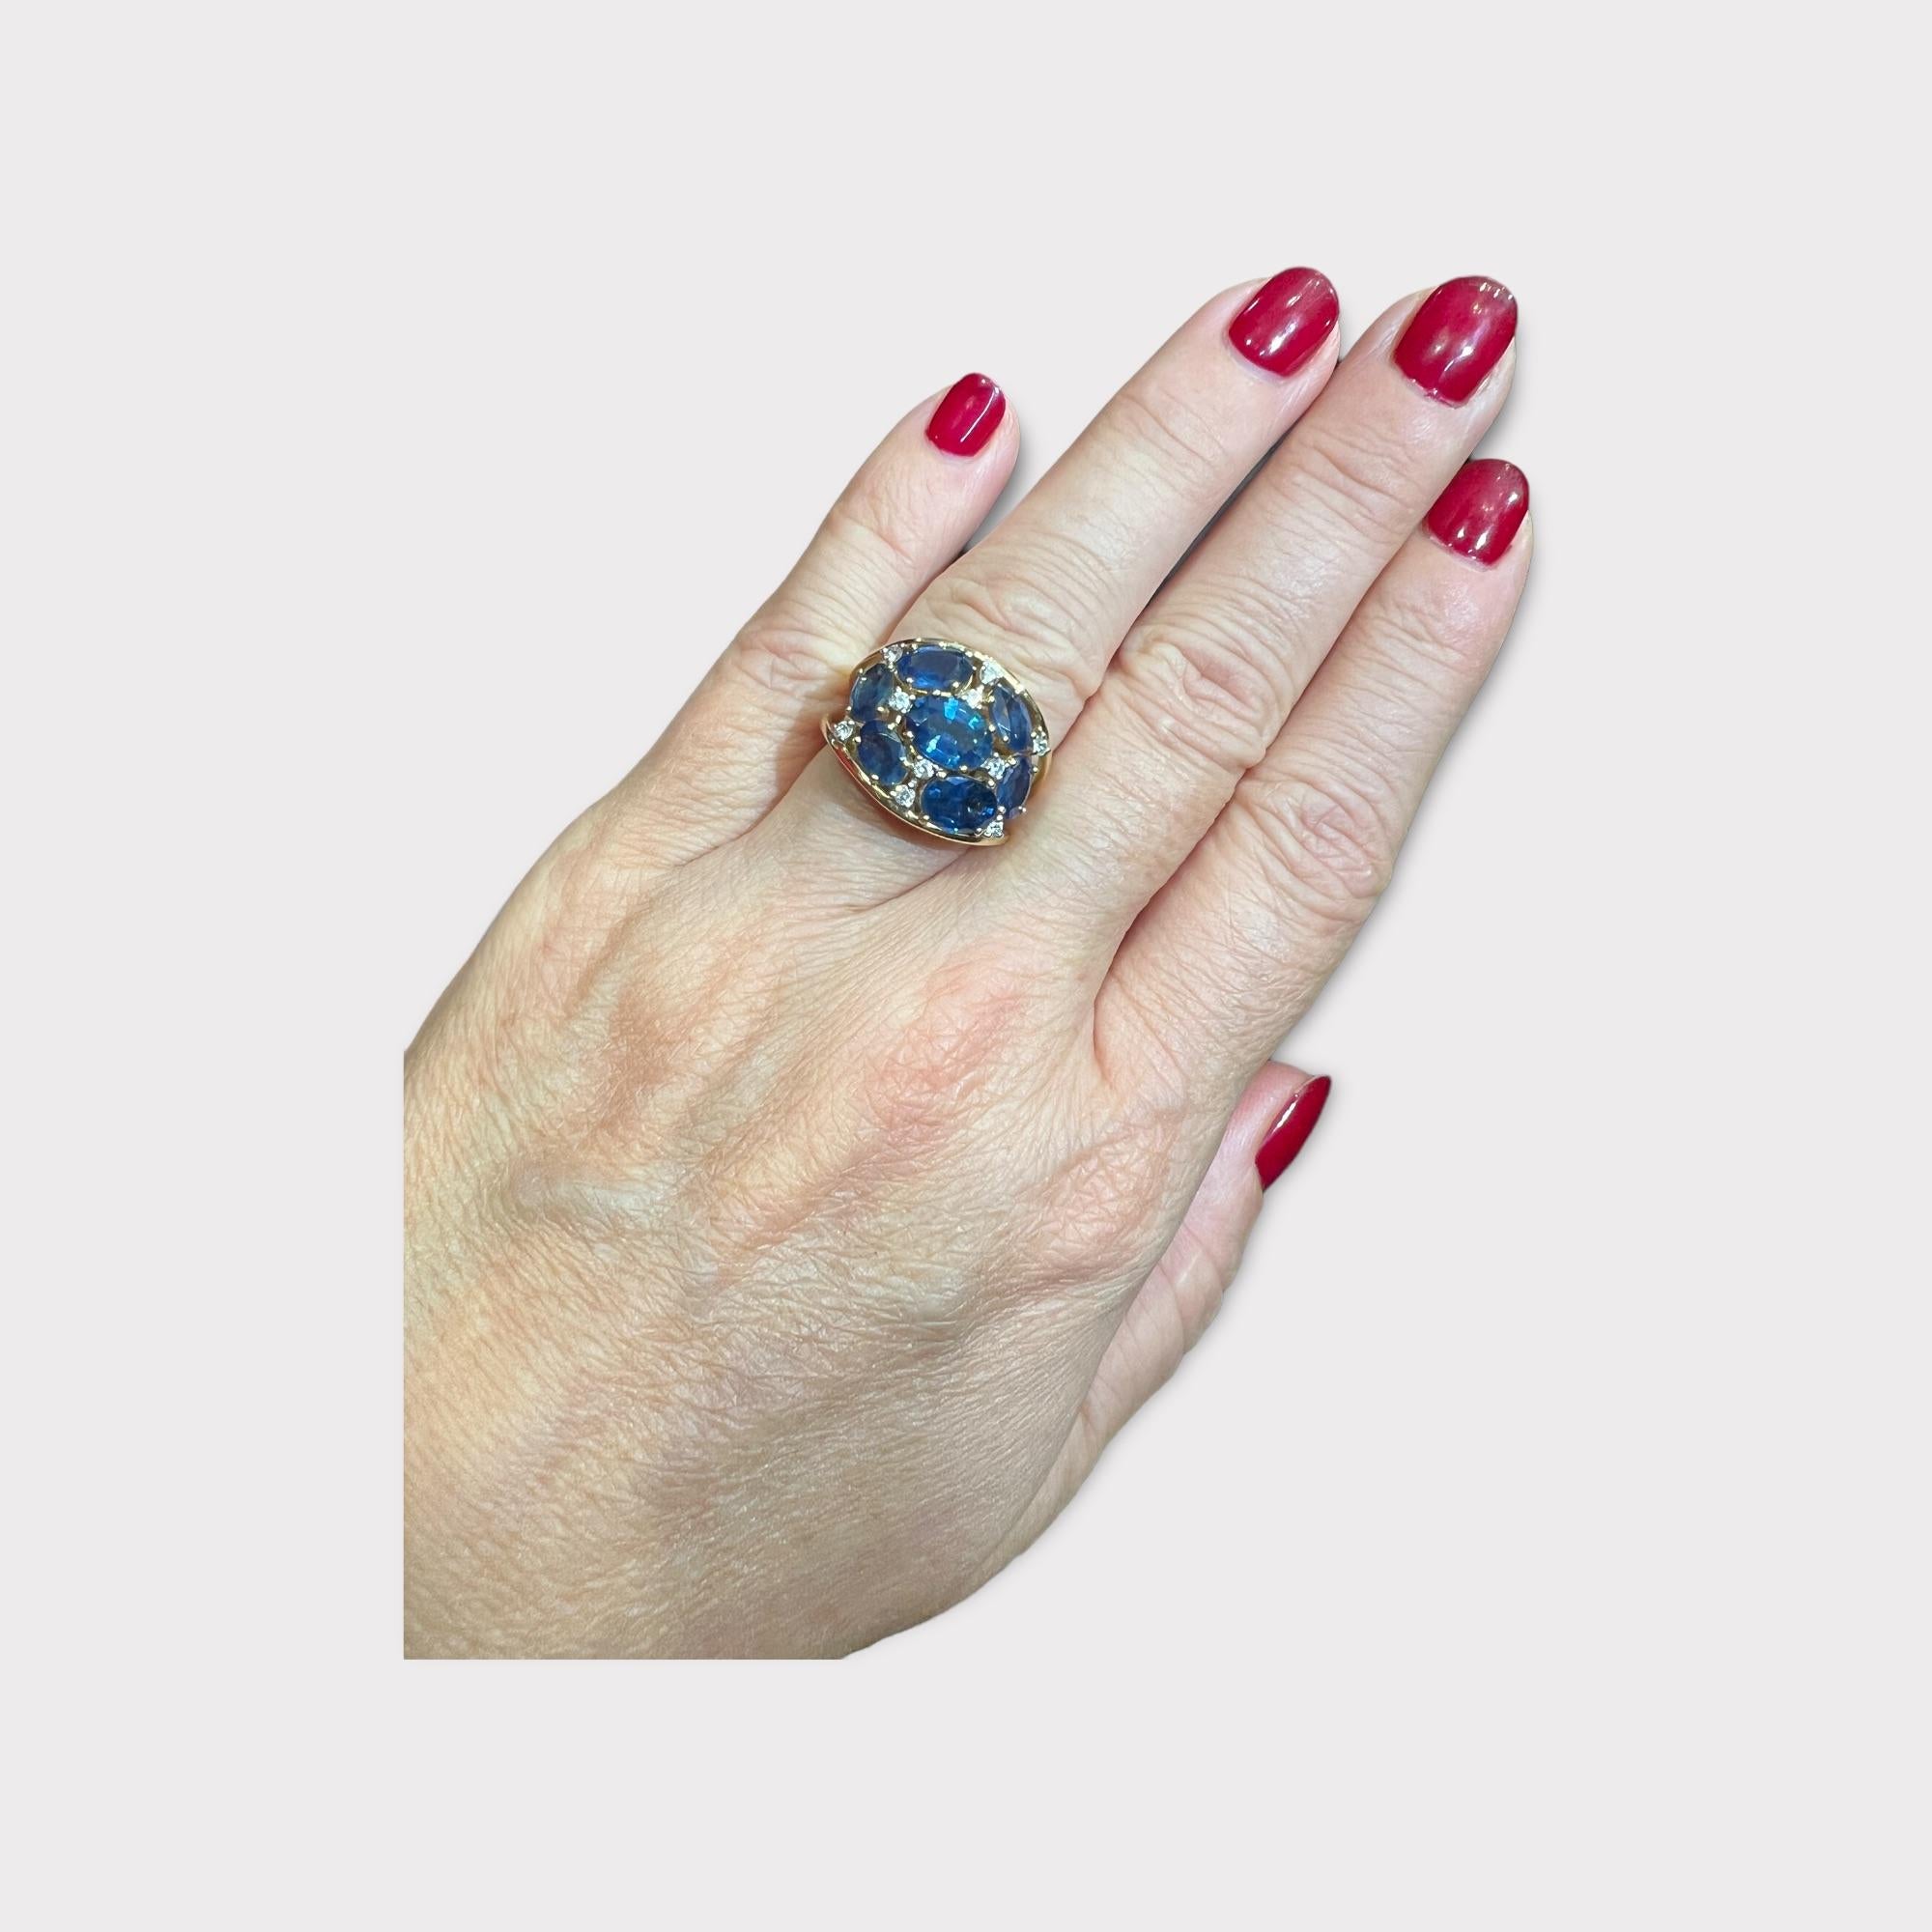 Women's 6, 19 Carat of Blue Saphirs and Diamonds, 18 Carat Gold Cocktail Ring